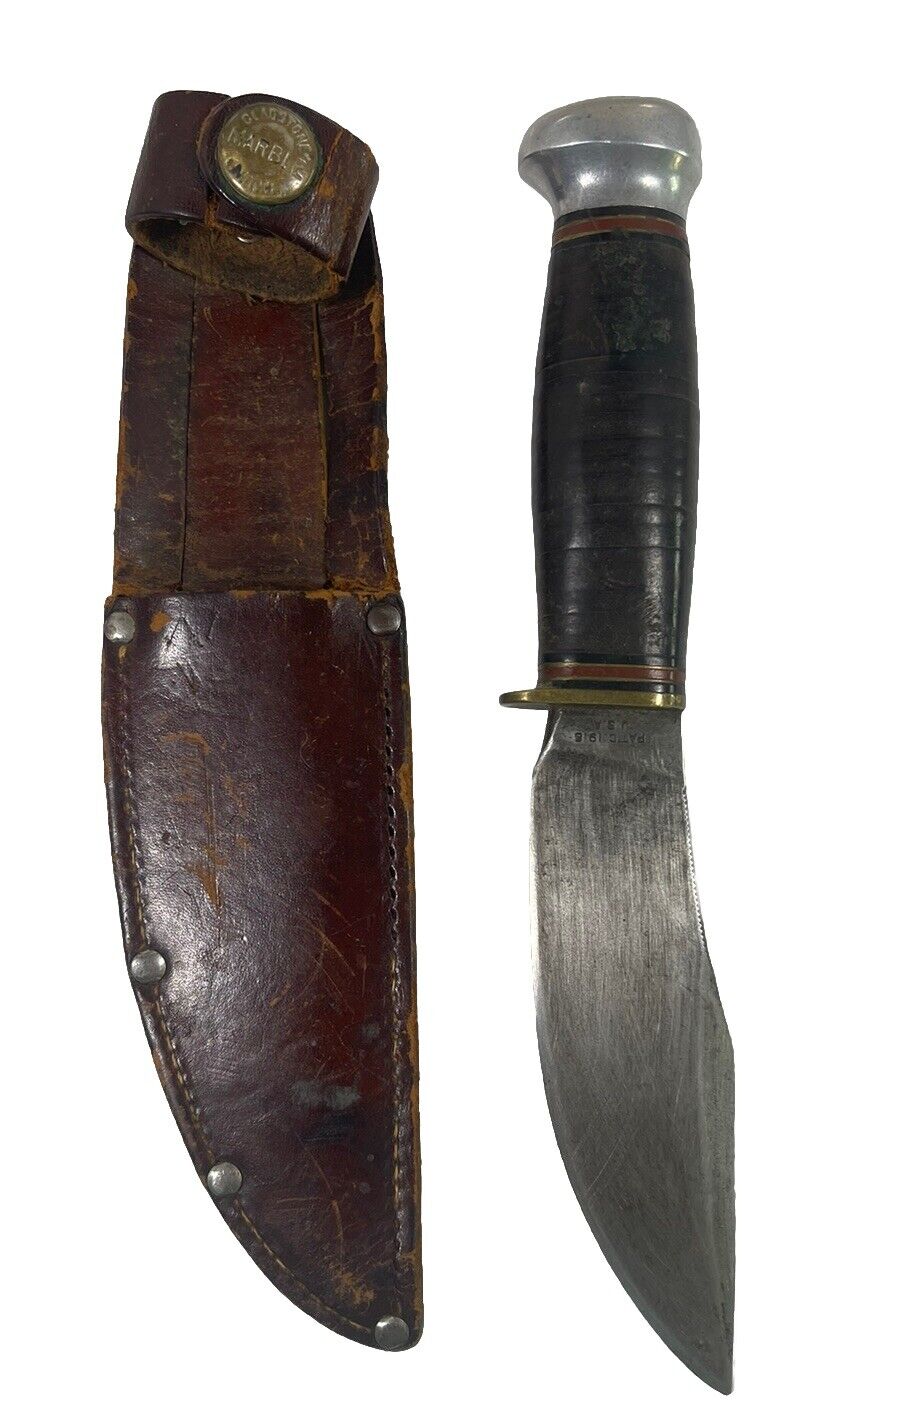 Vintage 1920's Marble's WOODCRAFT Knife Leather Handle PAT’D 1916 Gladstone MI